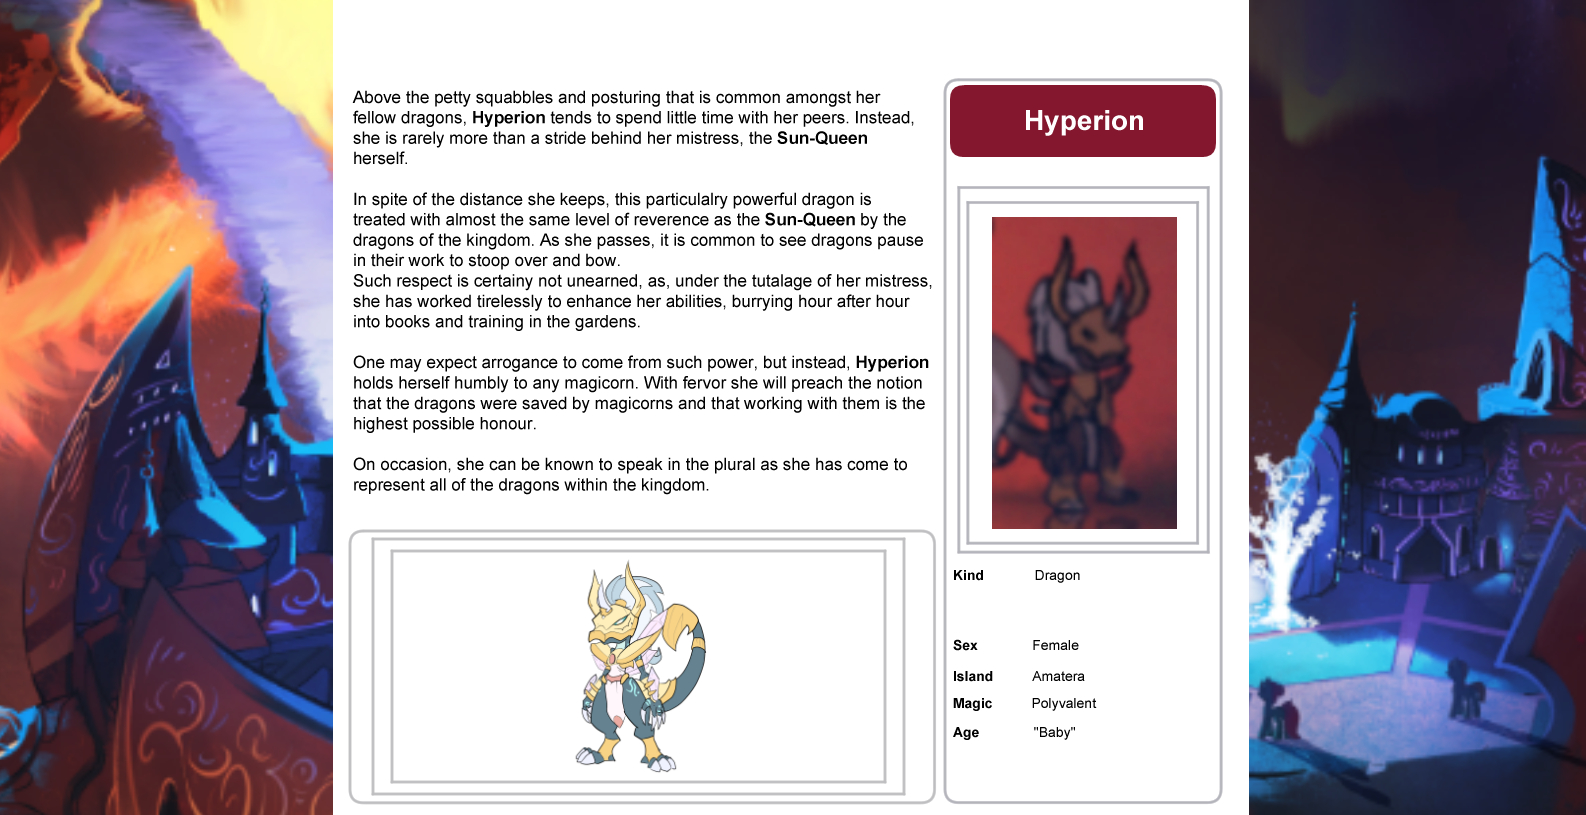 Hyperion (comics) - Wikipedia